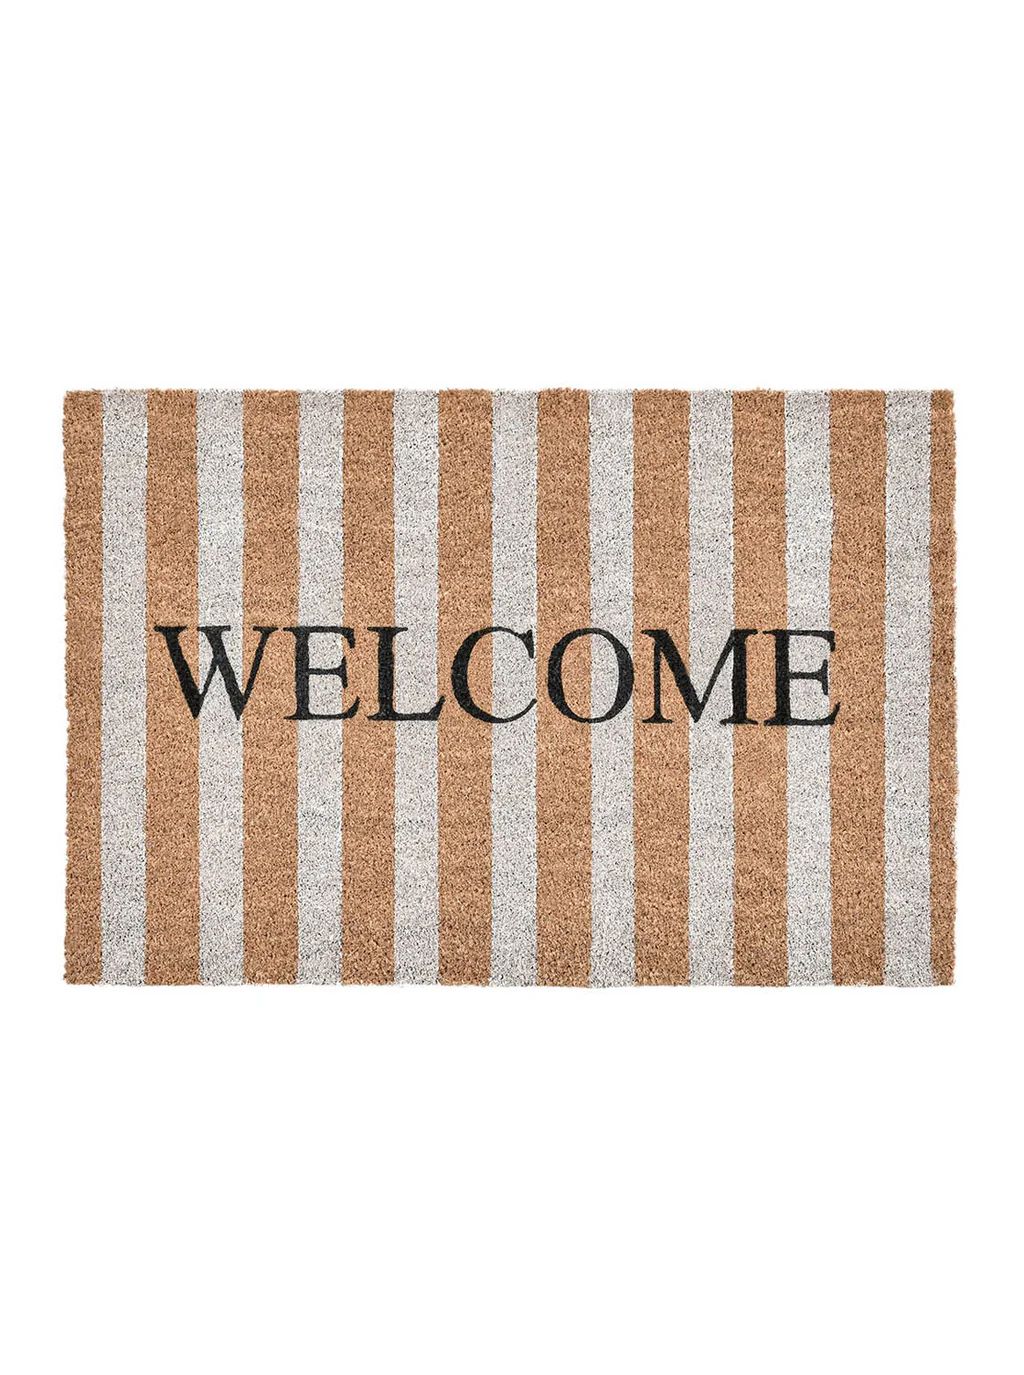 Striped Welcome Doormat | House of Jade Home